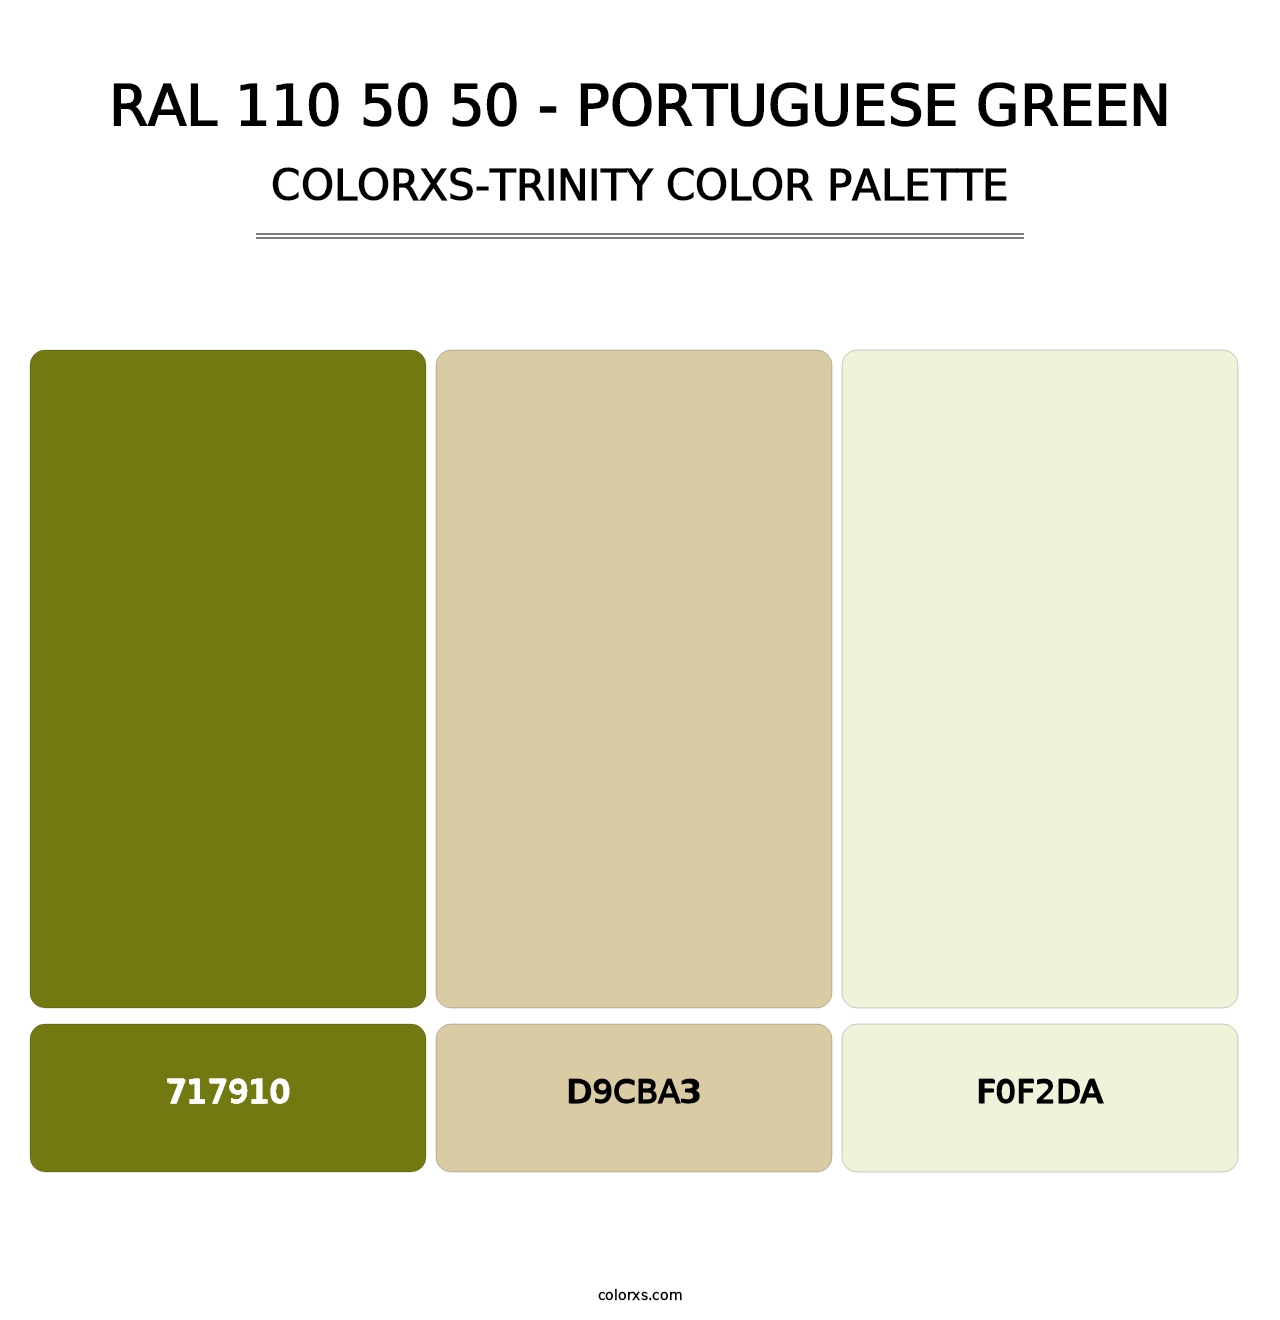 RAL 110 50 50 - Portuguese Green - Colorxs Trinity Palette